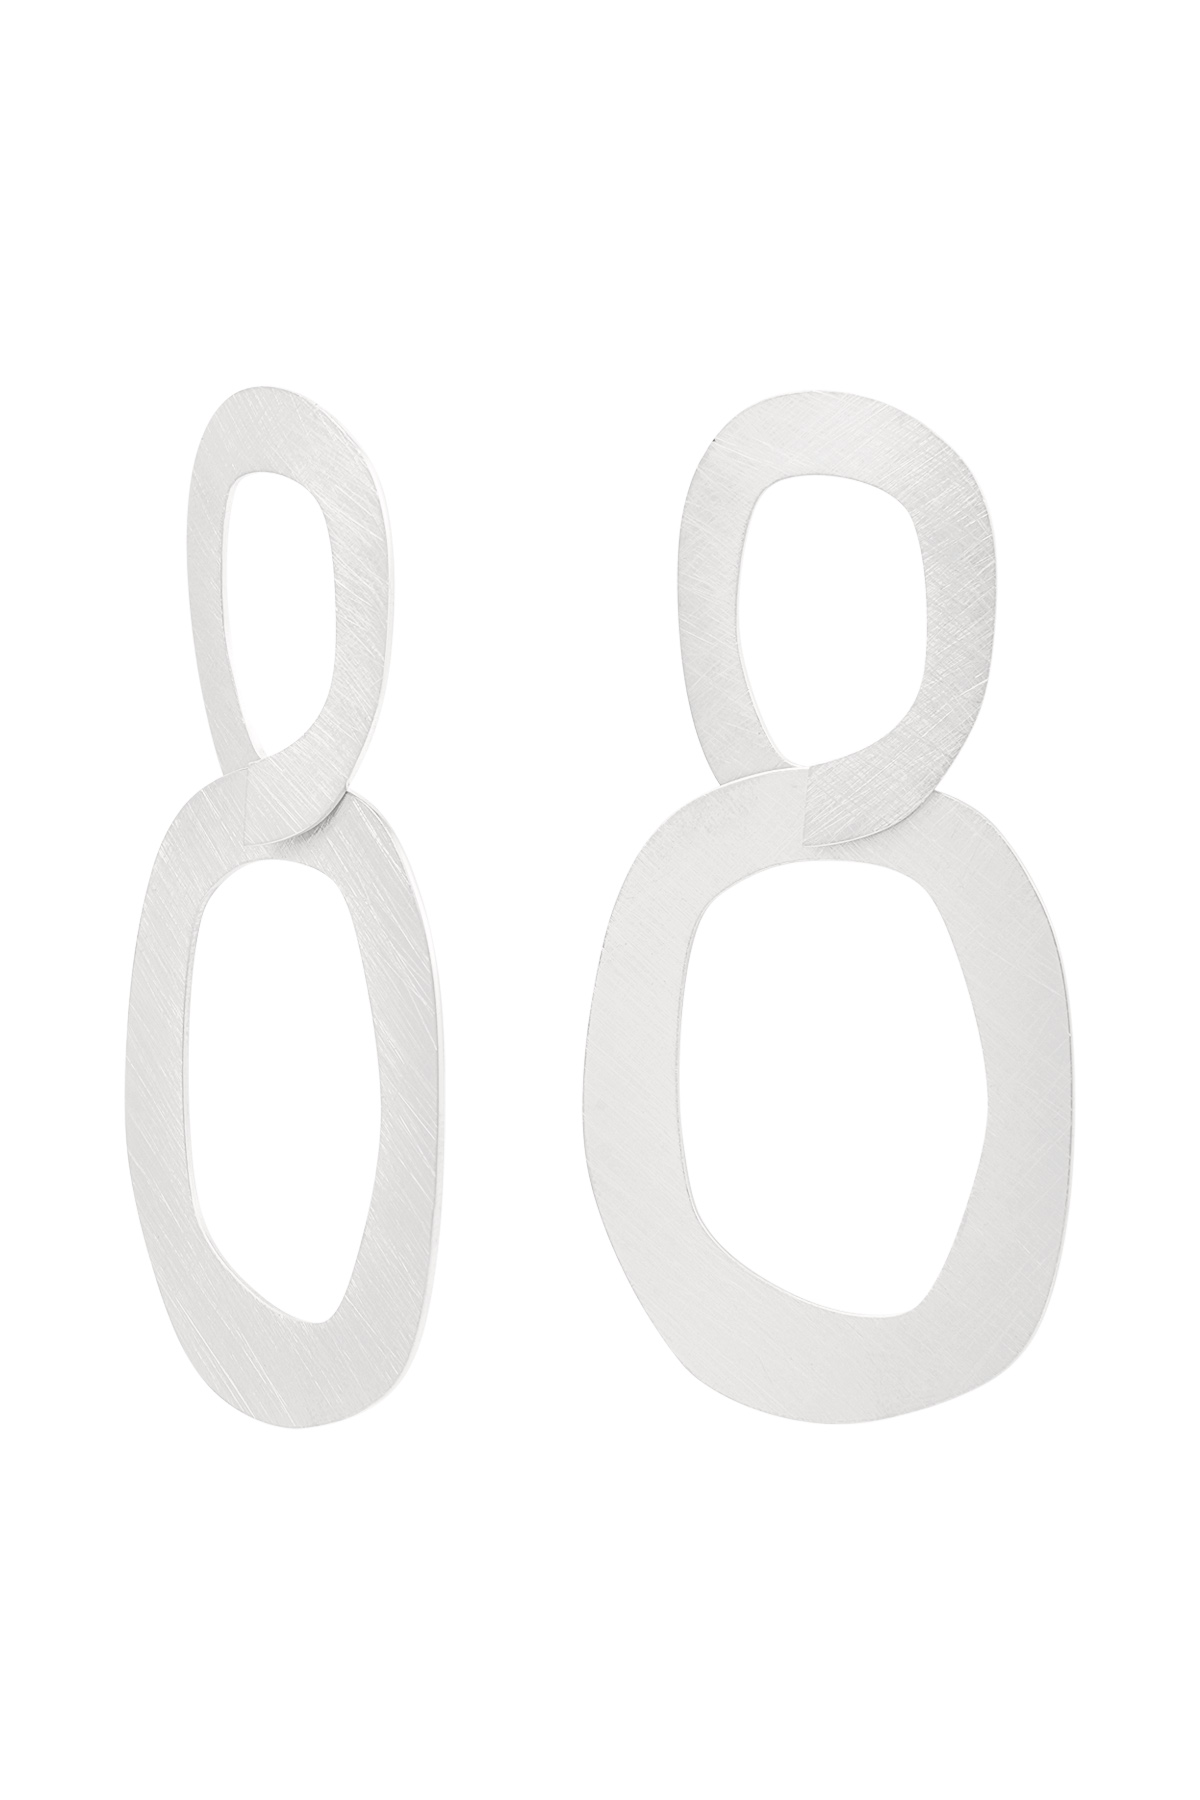 Earrings link - silver Stainless Steel